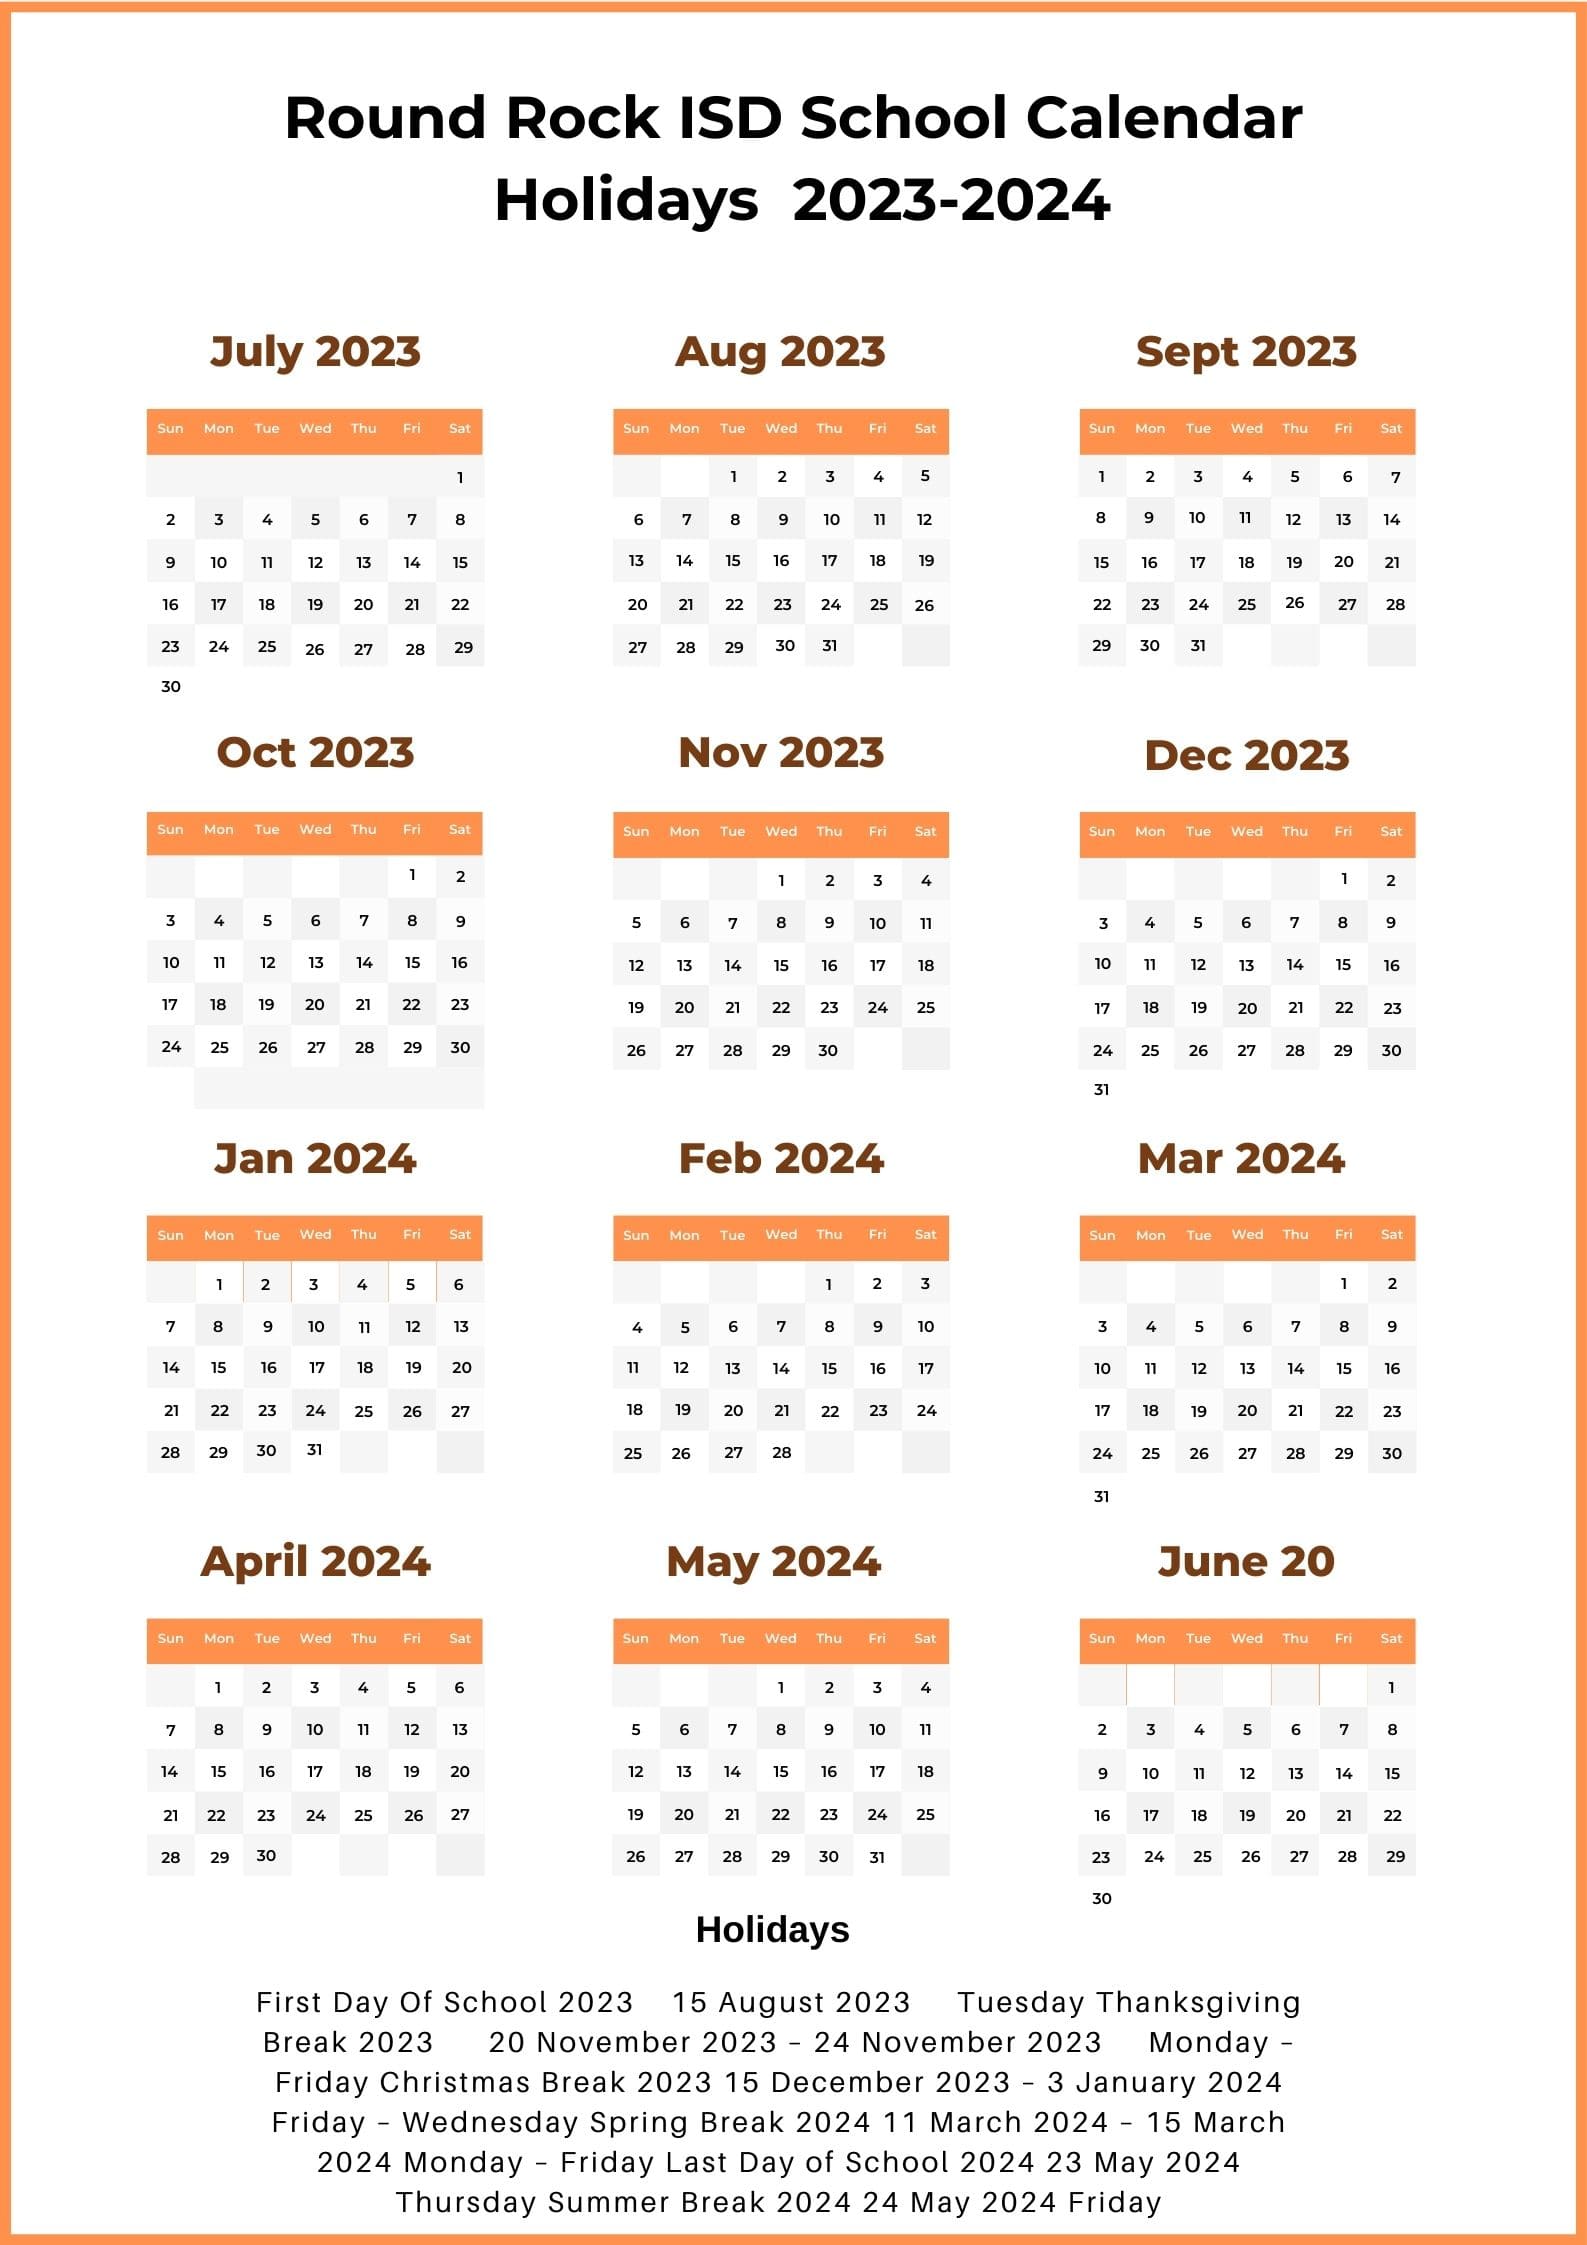 RRISD School Calendar & Holidays 2023-2024 [Round Rock ISD]